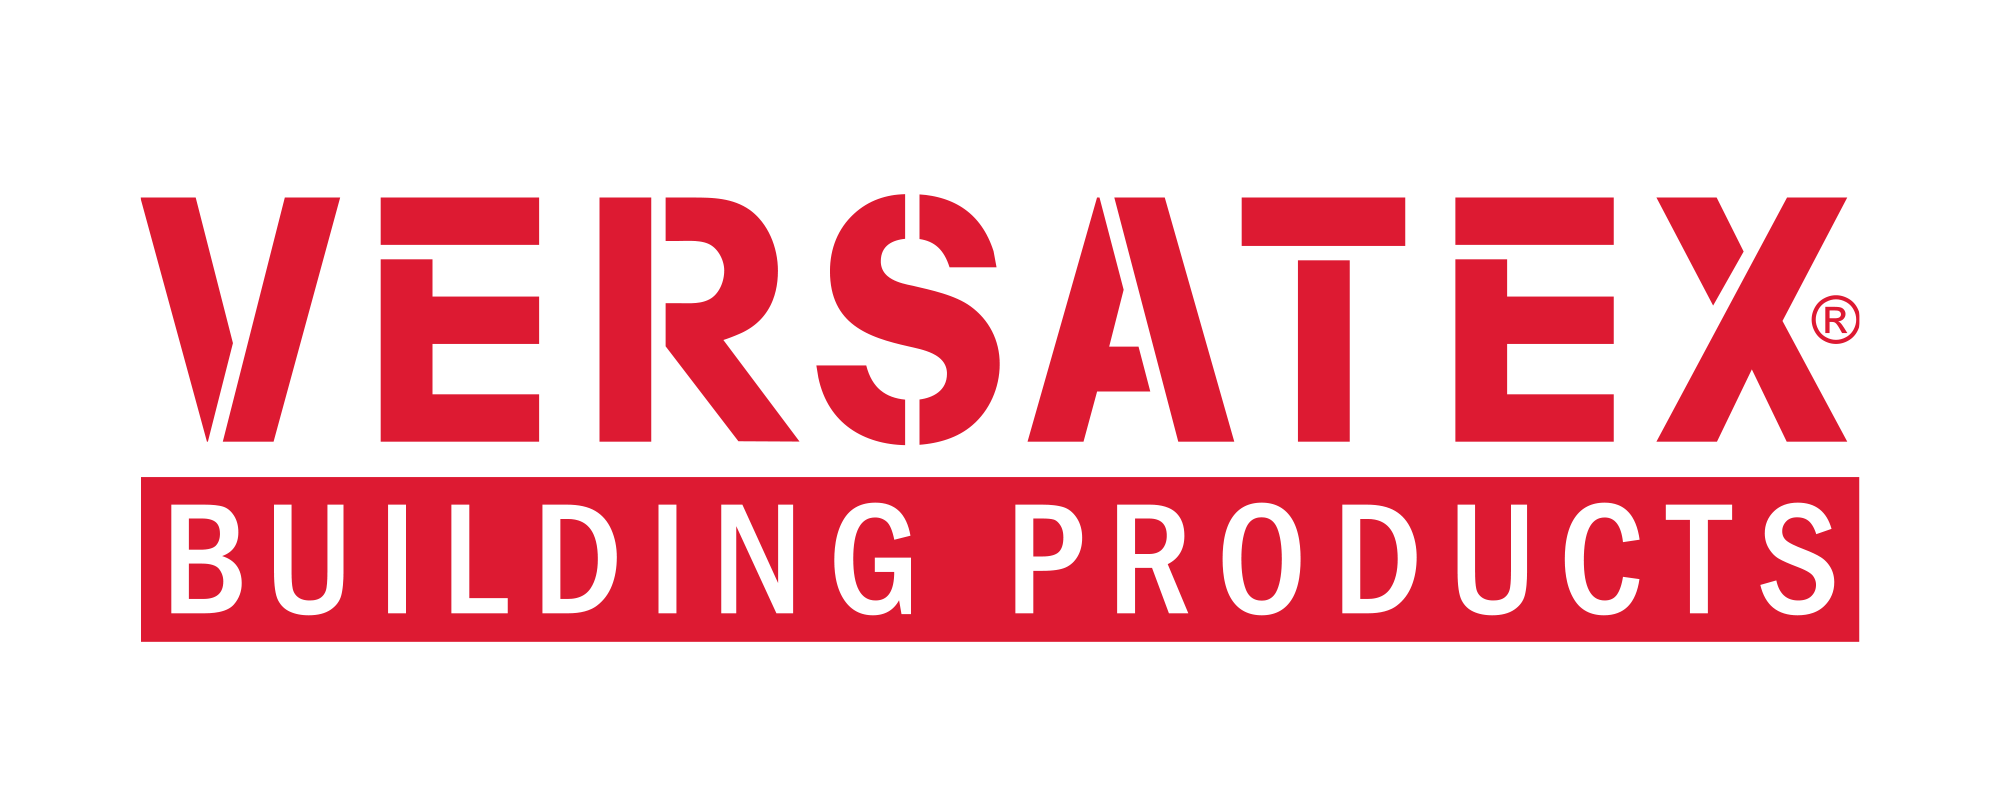 Versatex building products logo